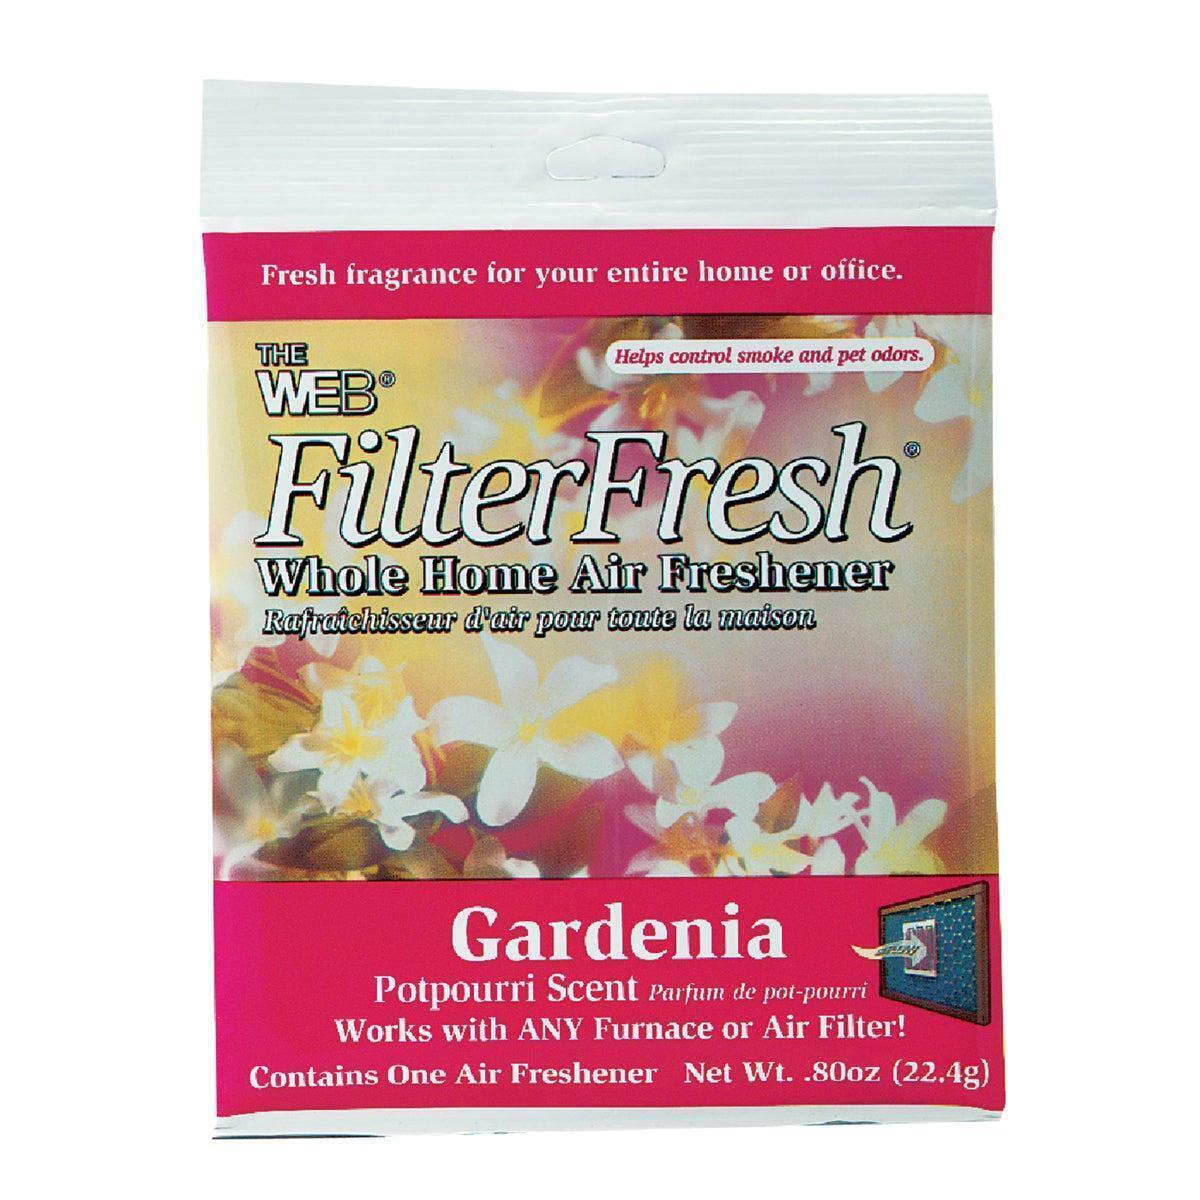 Web FilterFresh Furnace Air Freshener, Gardenia WGARD